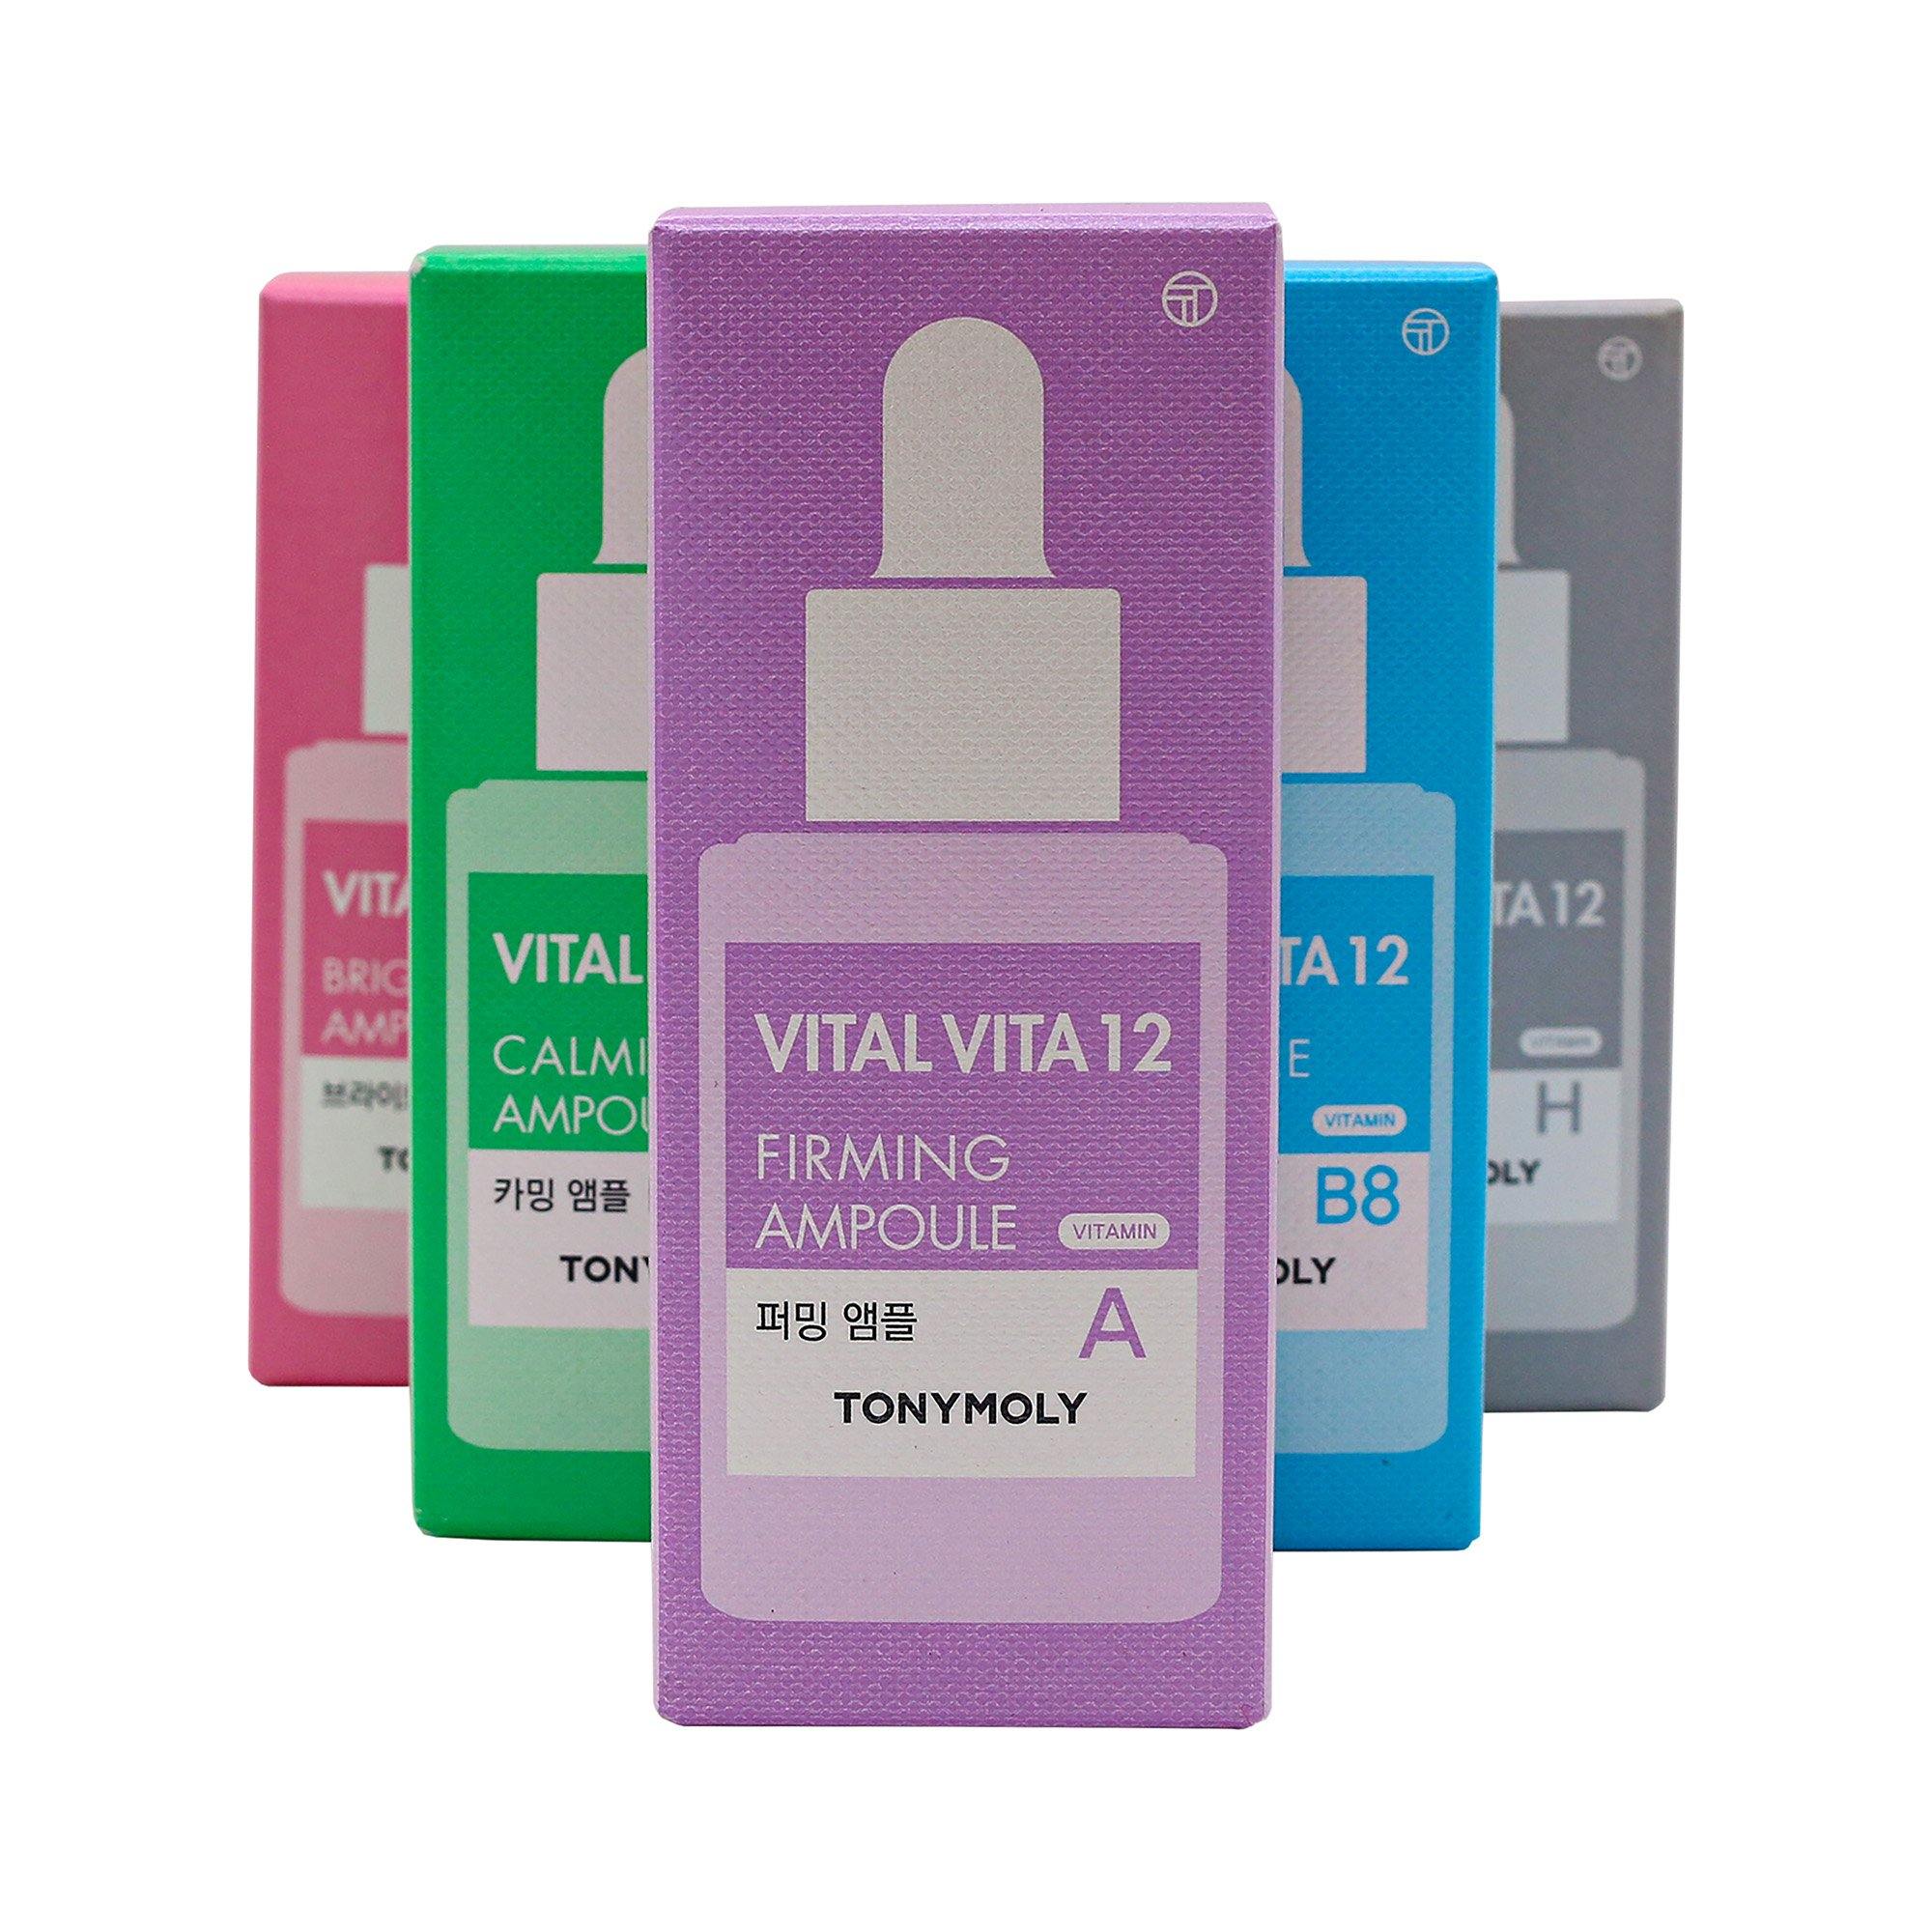 TONYMOLY Vital Vita 12 - Firming Ampoule 30ml - TONYMOLY OFFICIAL